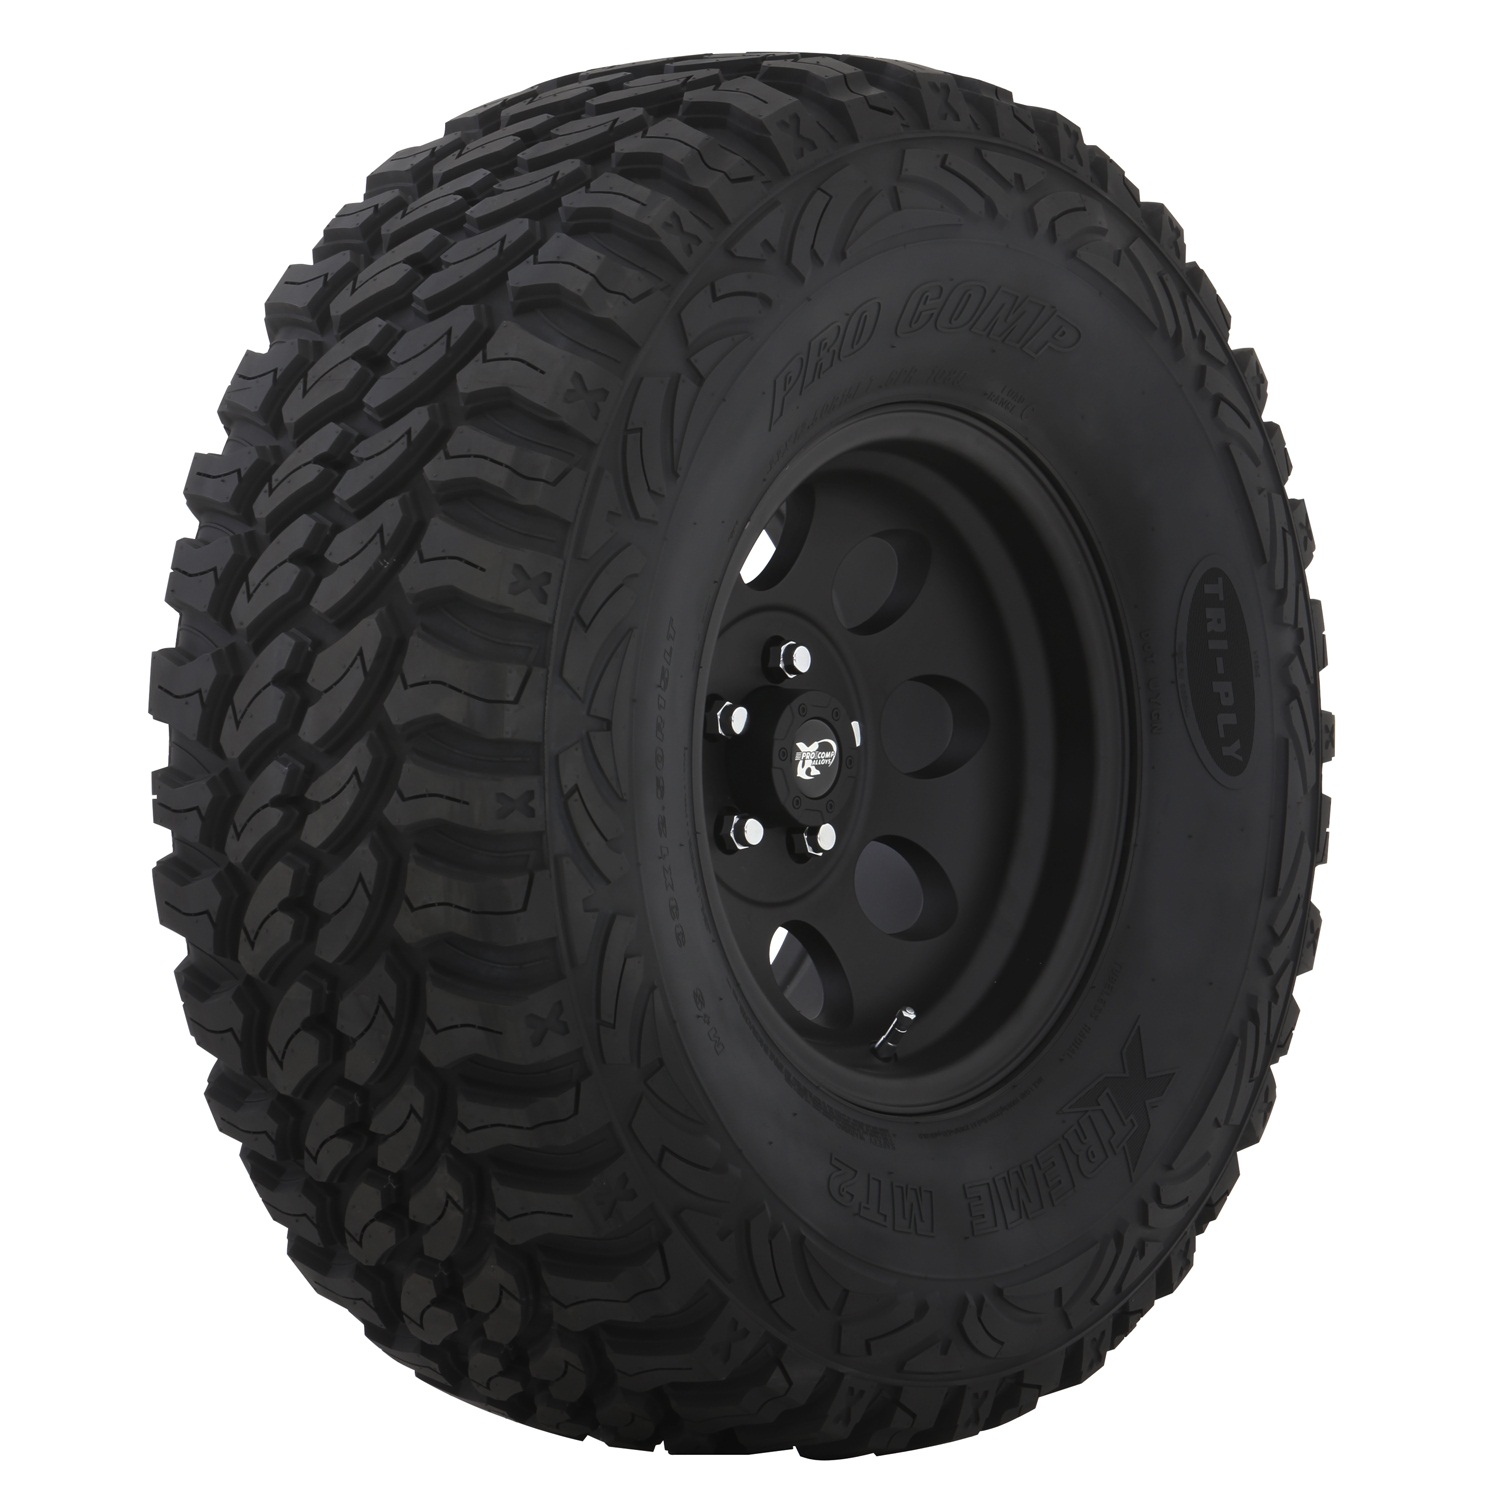 Pro Comp Tires Pro Comp Tires 701237 Pro Comp Xtreme Mud Terrain 2; Tire